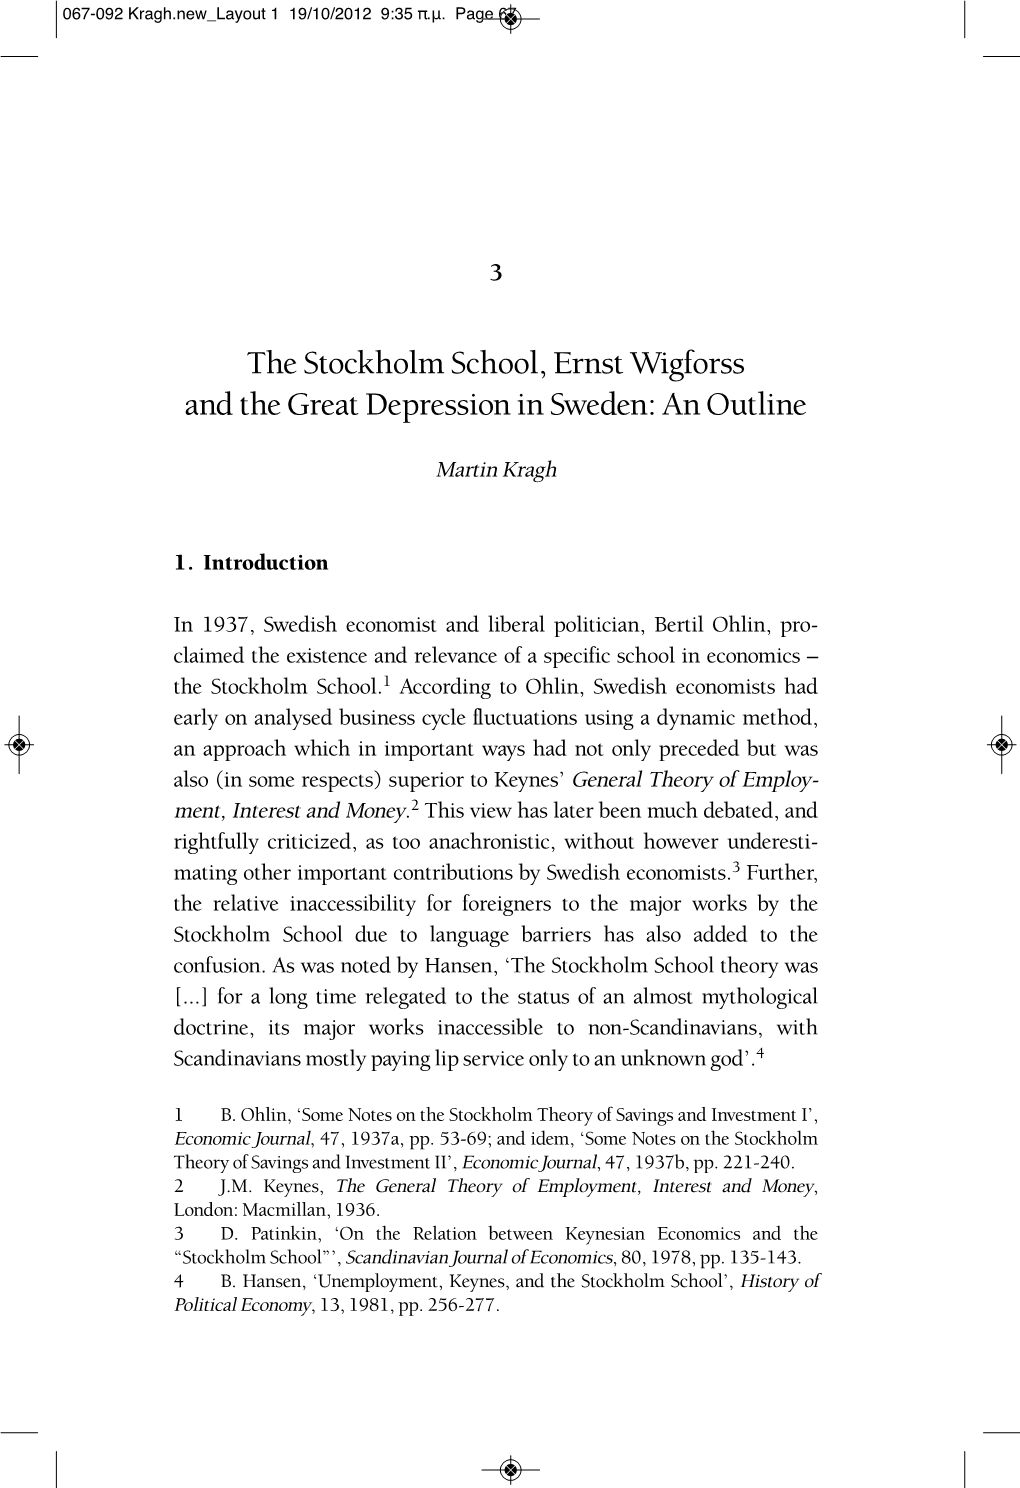 The Stockholm School, Ernst Wigforss and the Great Depression in Sweden: an Outline